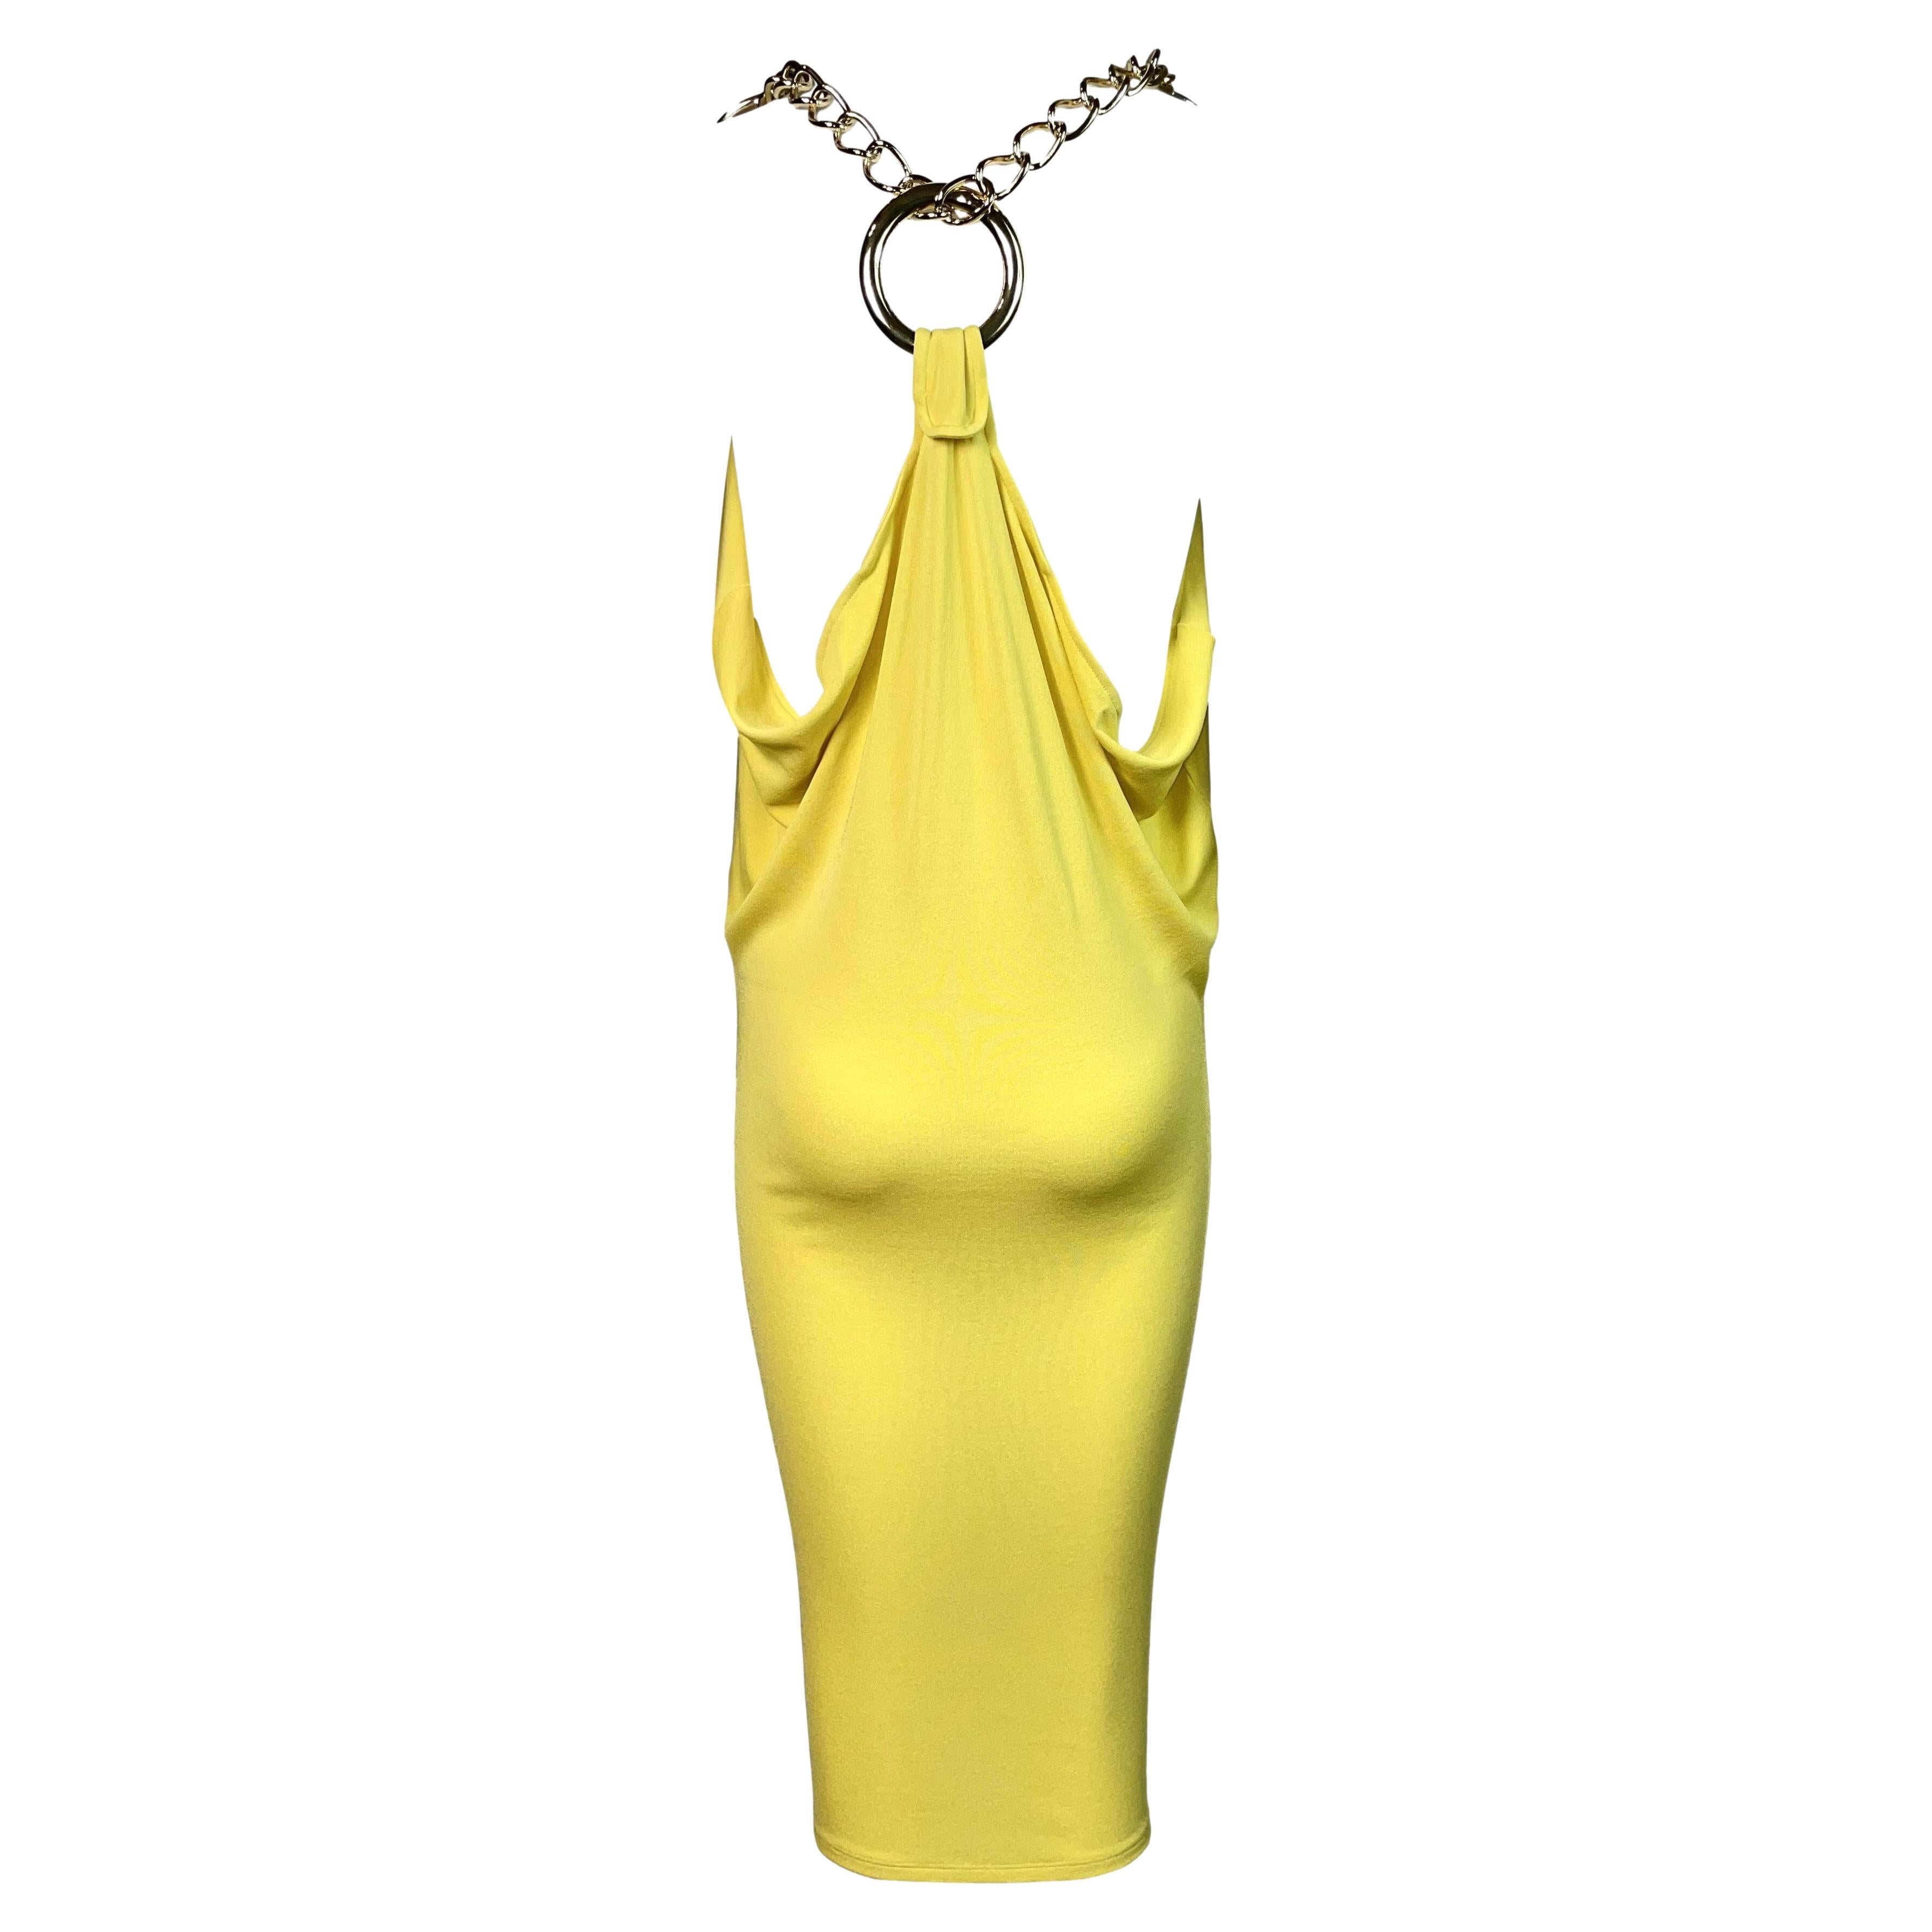 S/S 2005 Roberto Cavalli Gold Chain Straps Yellow Bodycon Dress